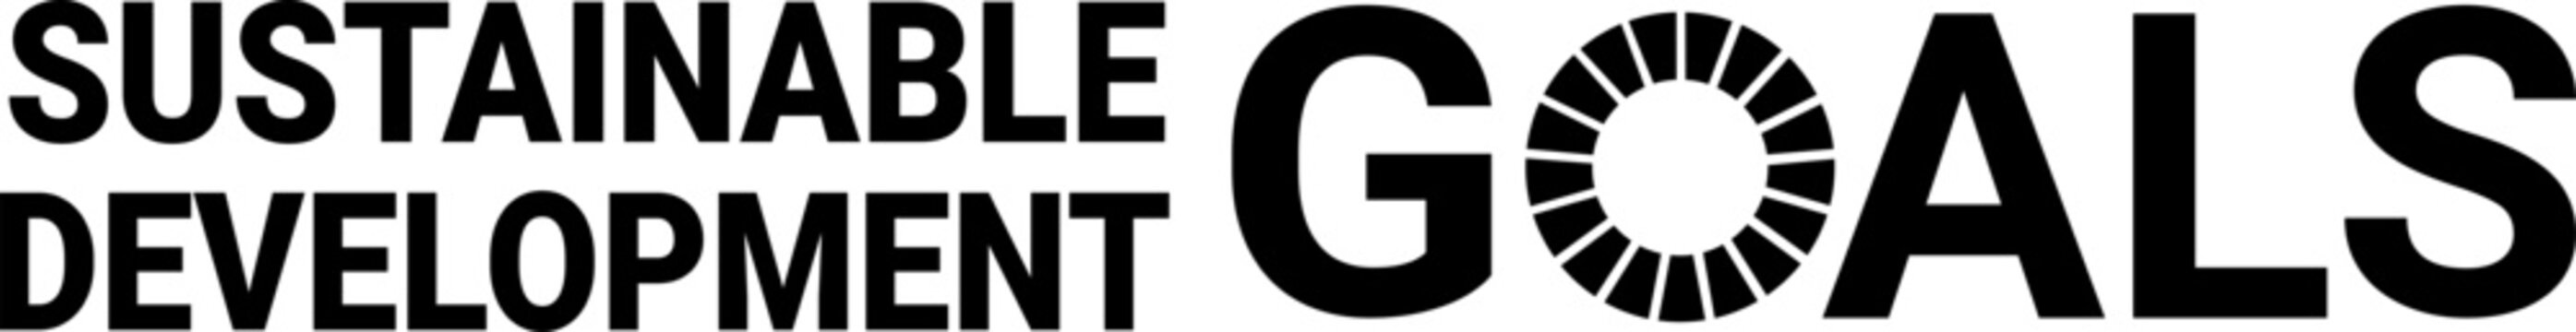 Sustainable Development Goal (SDG) horizontal logo black version for no-UN entities system